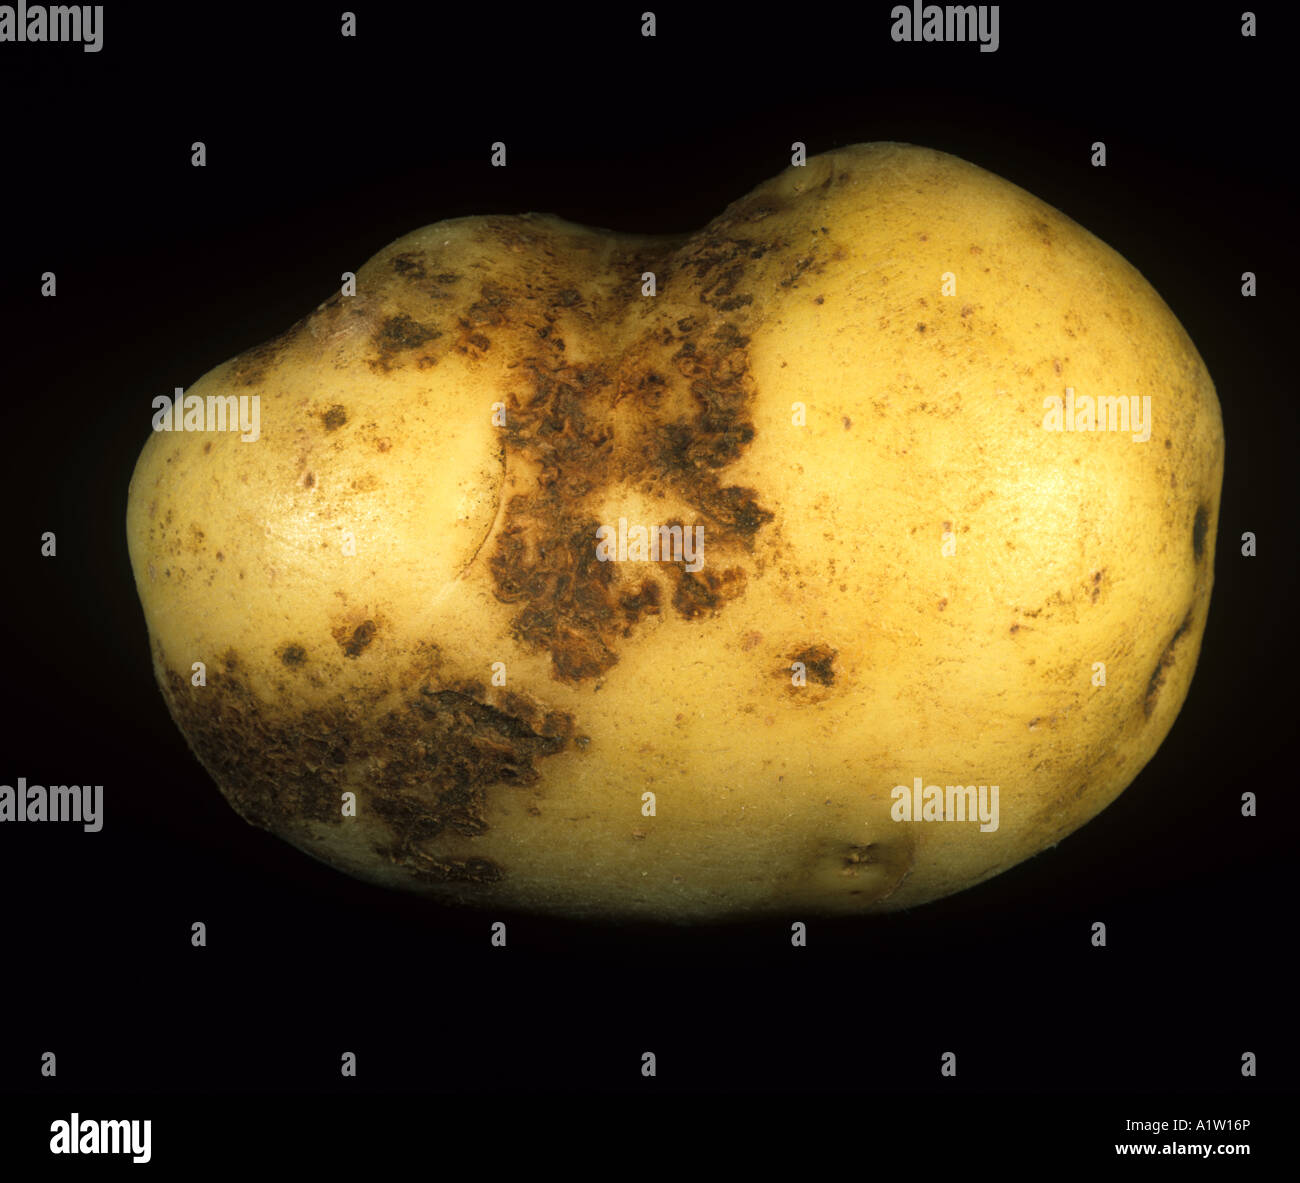 Black scurf Rhizoctonia solani scab like damage to the skin of a potato tuber Scotland Stock Photo